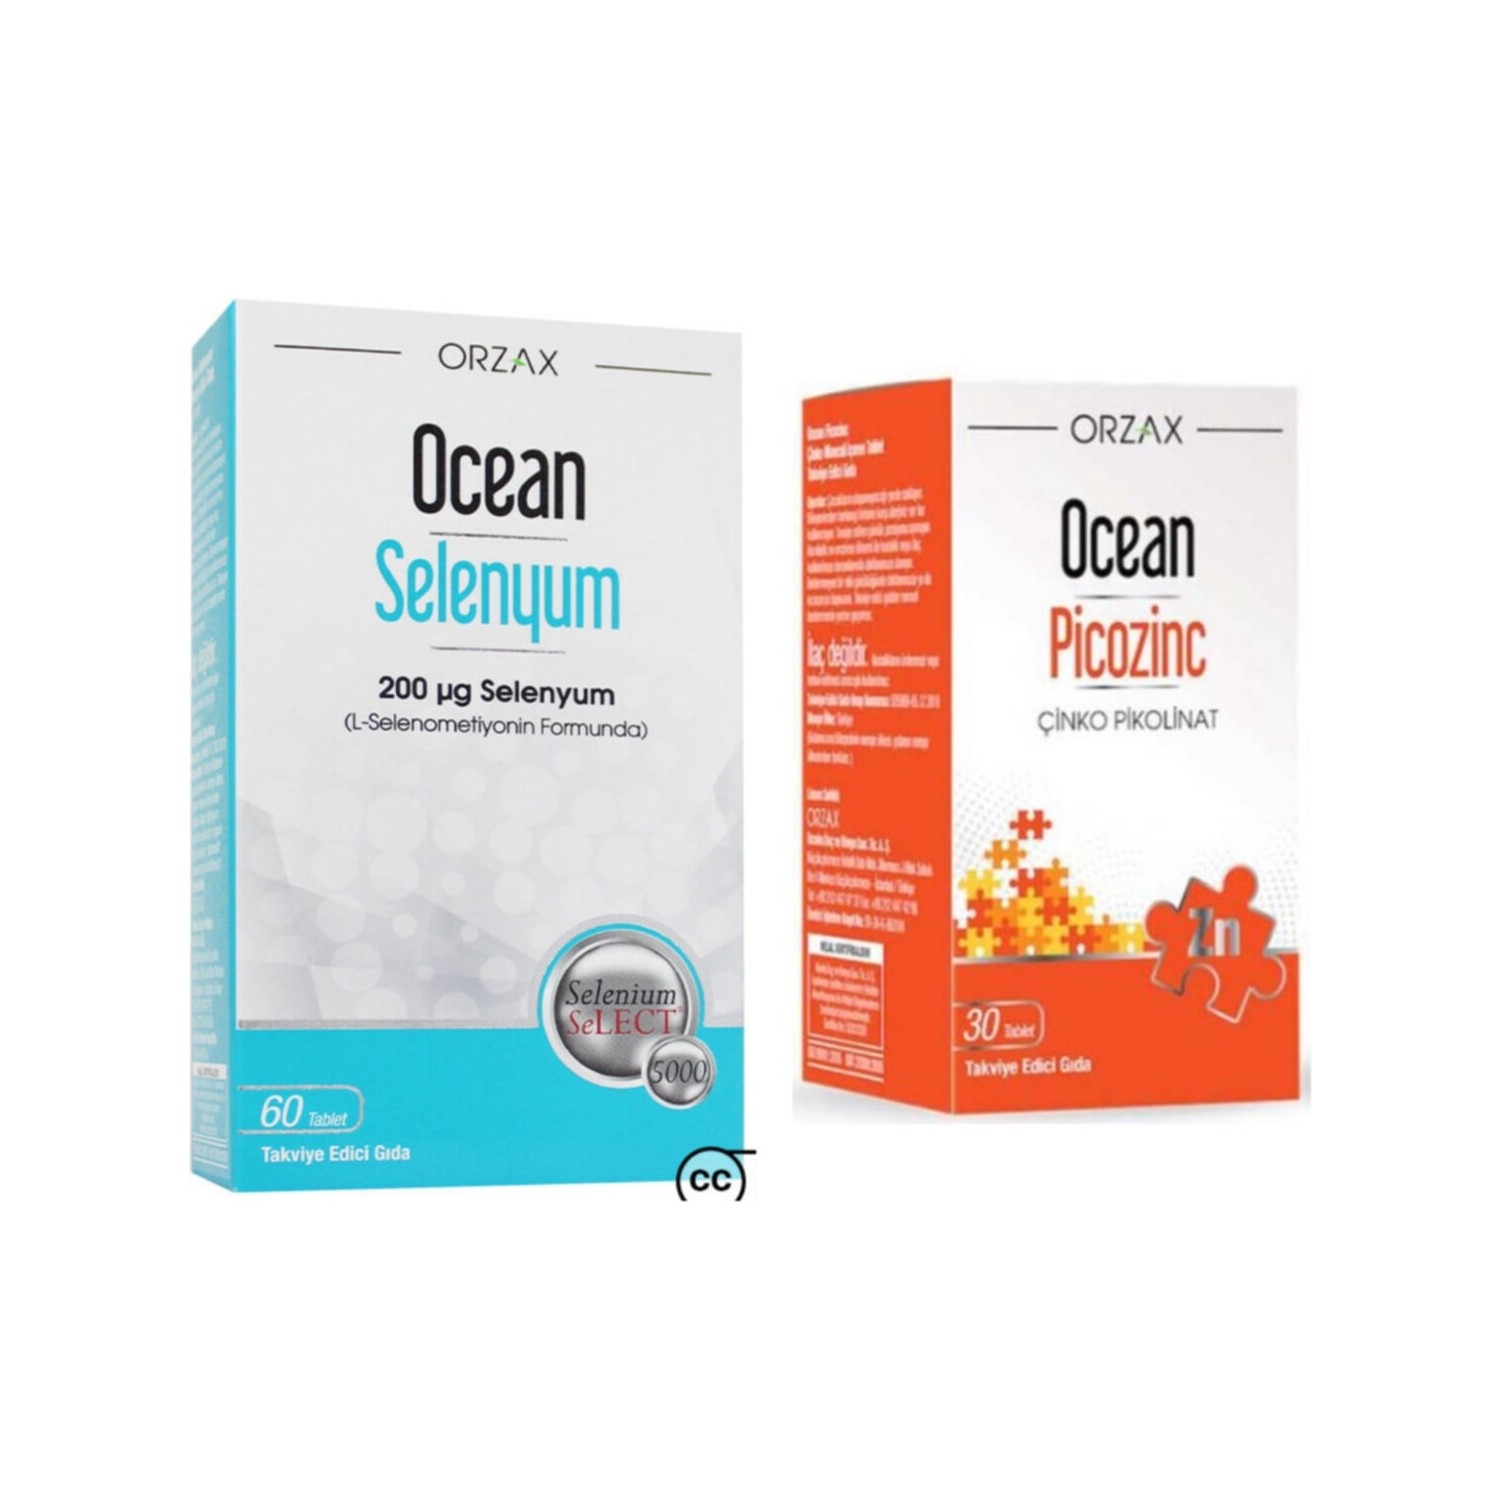 Селен Ocean 200 мкг, 60 таблеток + Пищевая добавка Ocean Picozinc Cinko Picolinate, 30 капсул добавка селена ocean 100 мкг 30 таблеток